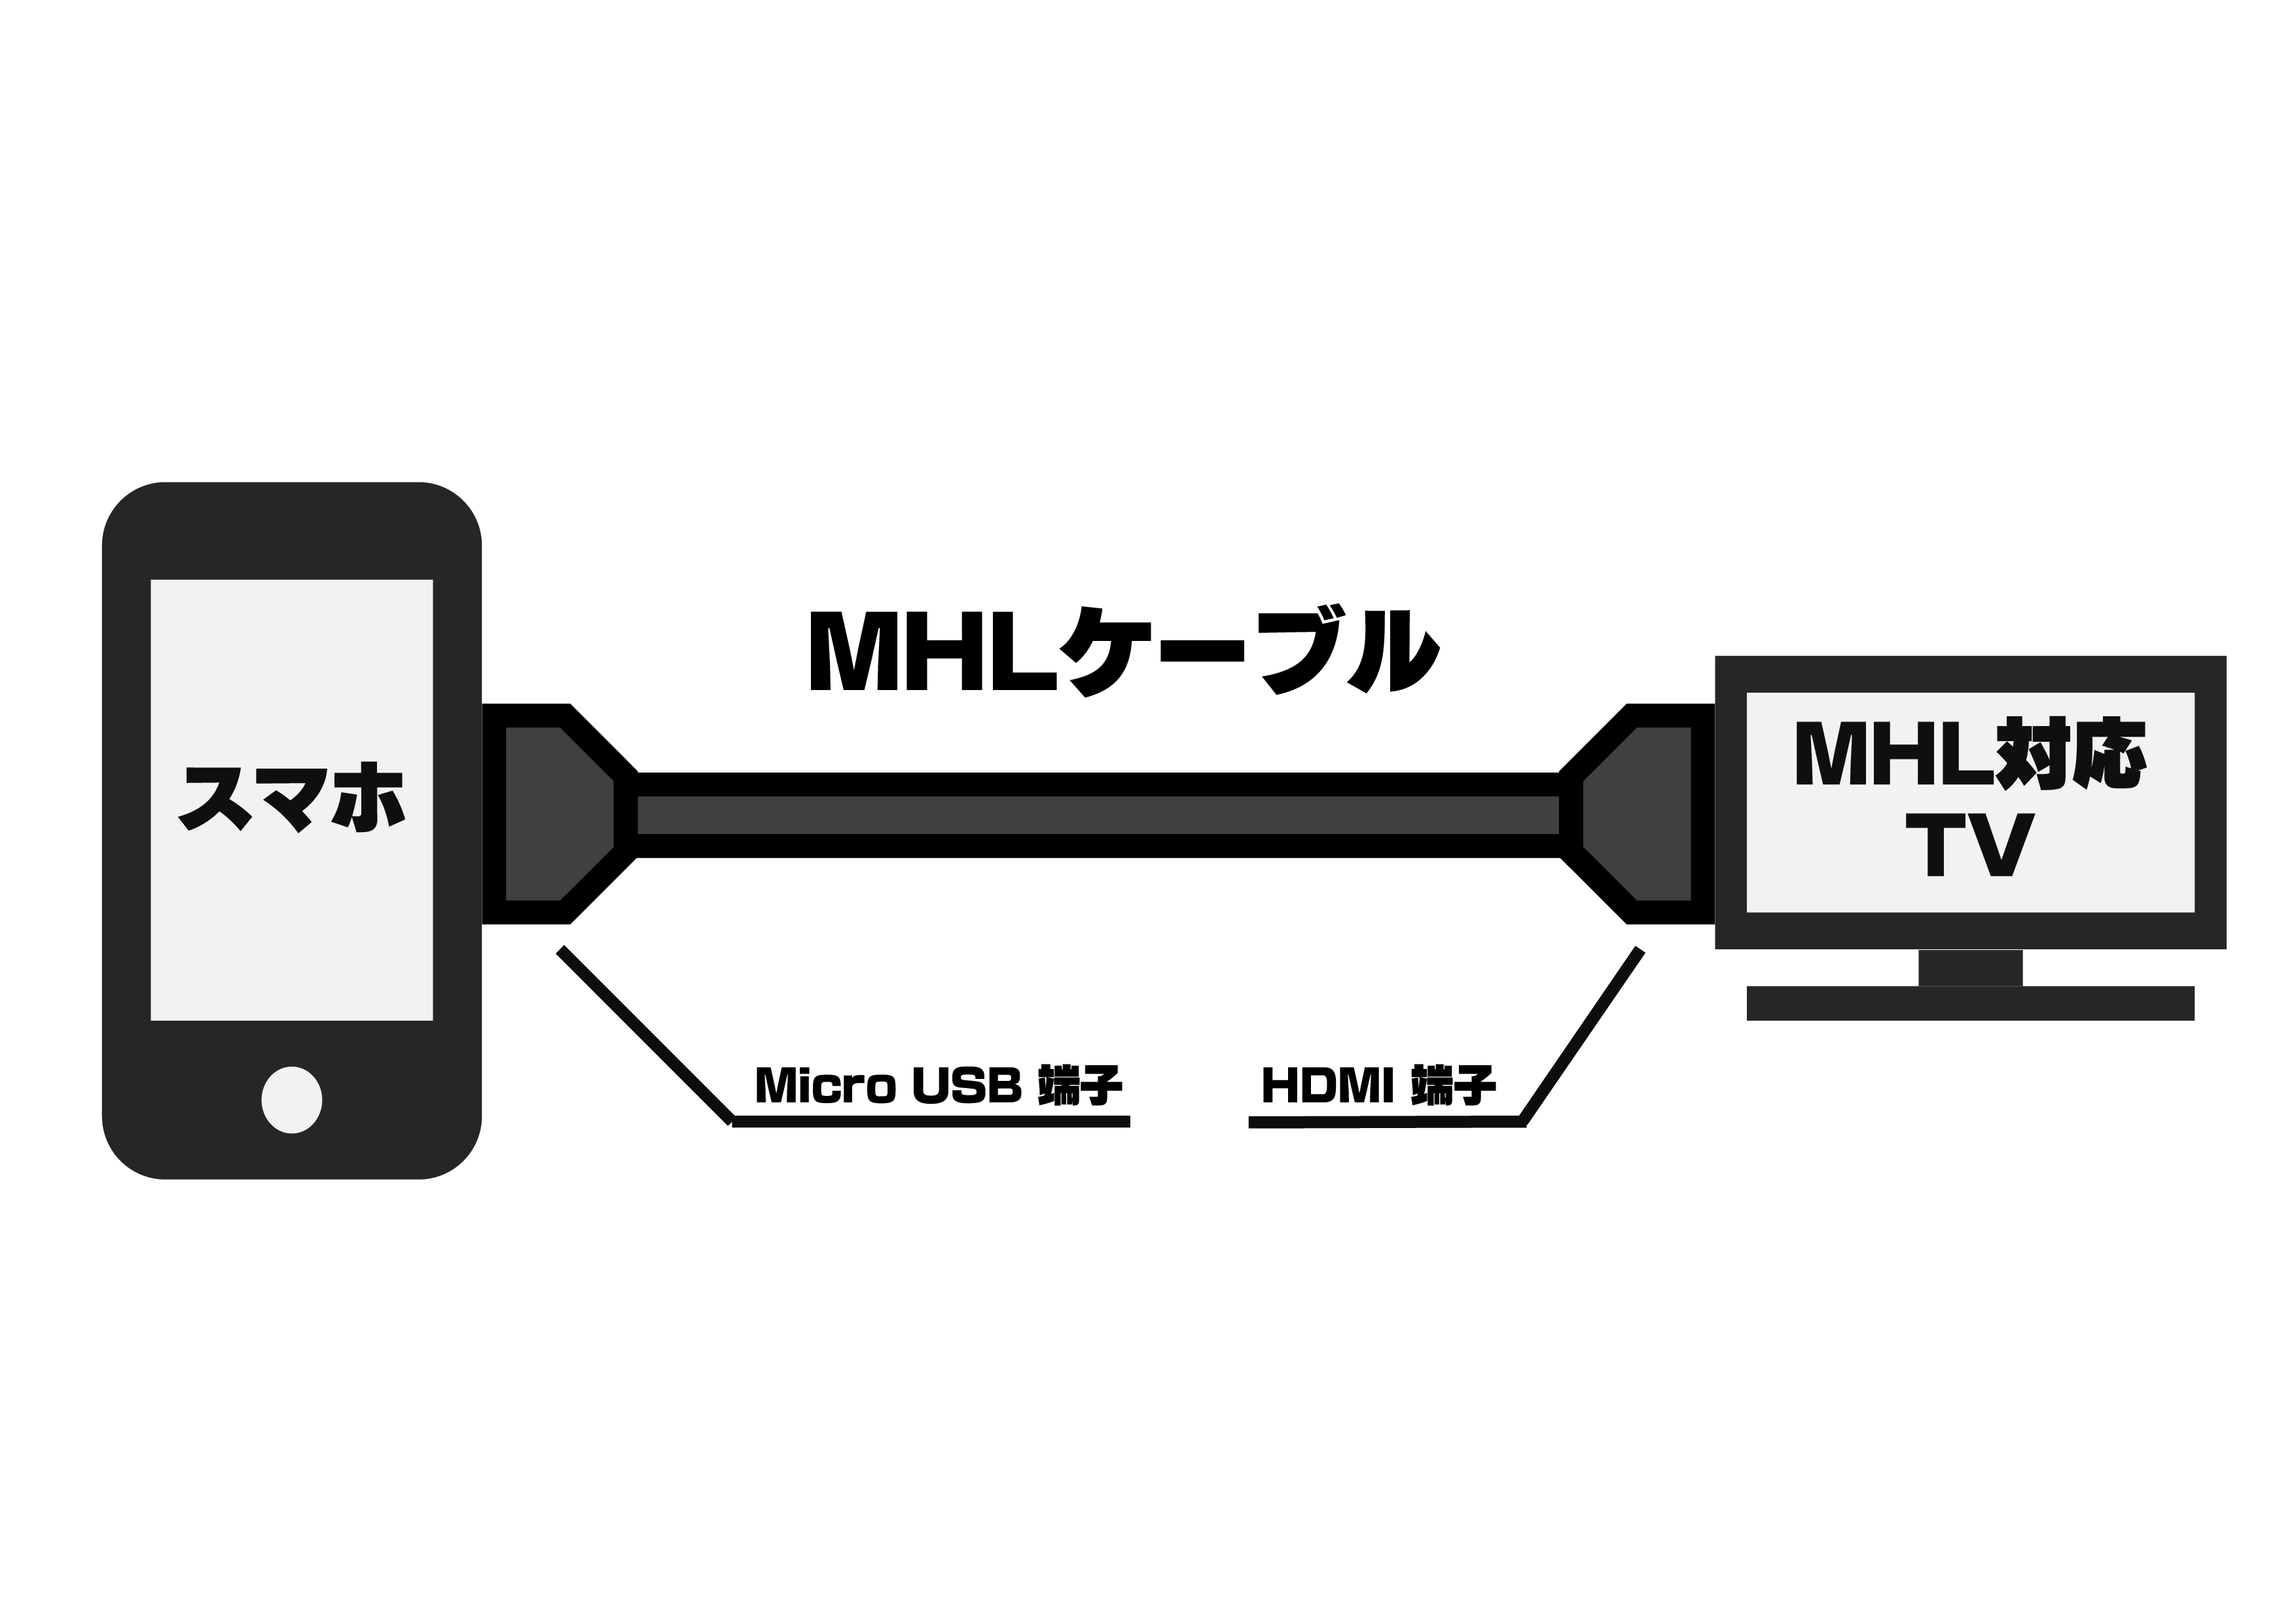 Mhl Chromecast スマホの画面をテレビに映す方法まとめ Gadget Initiative